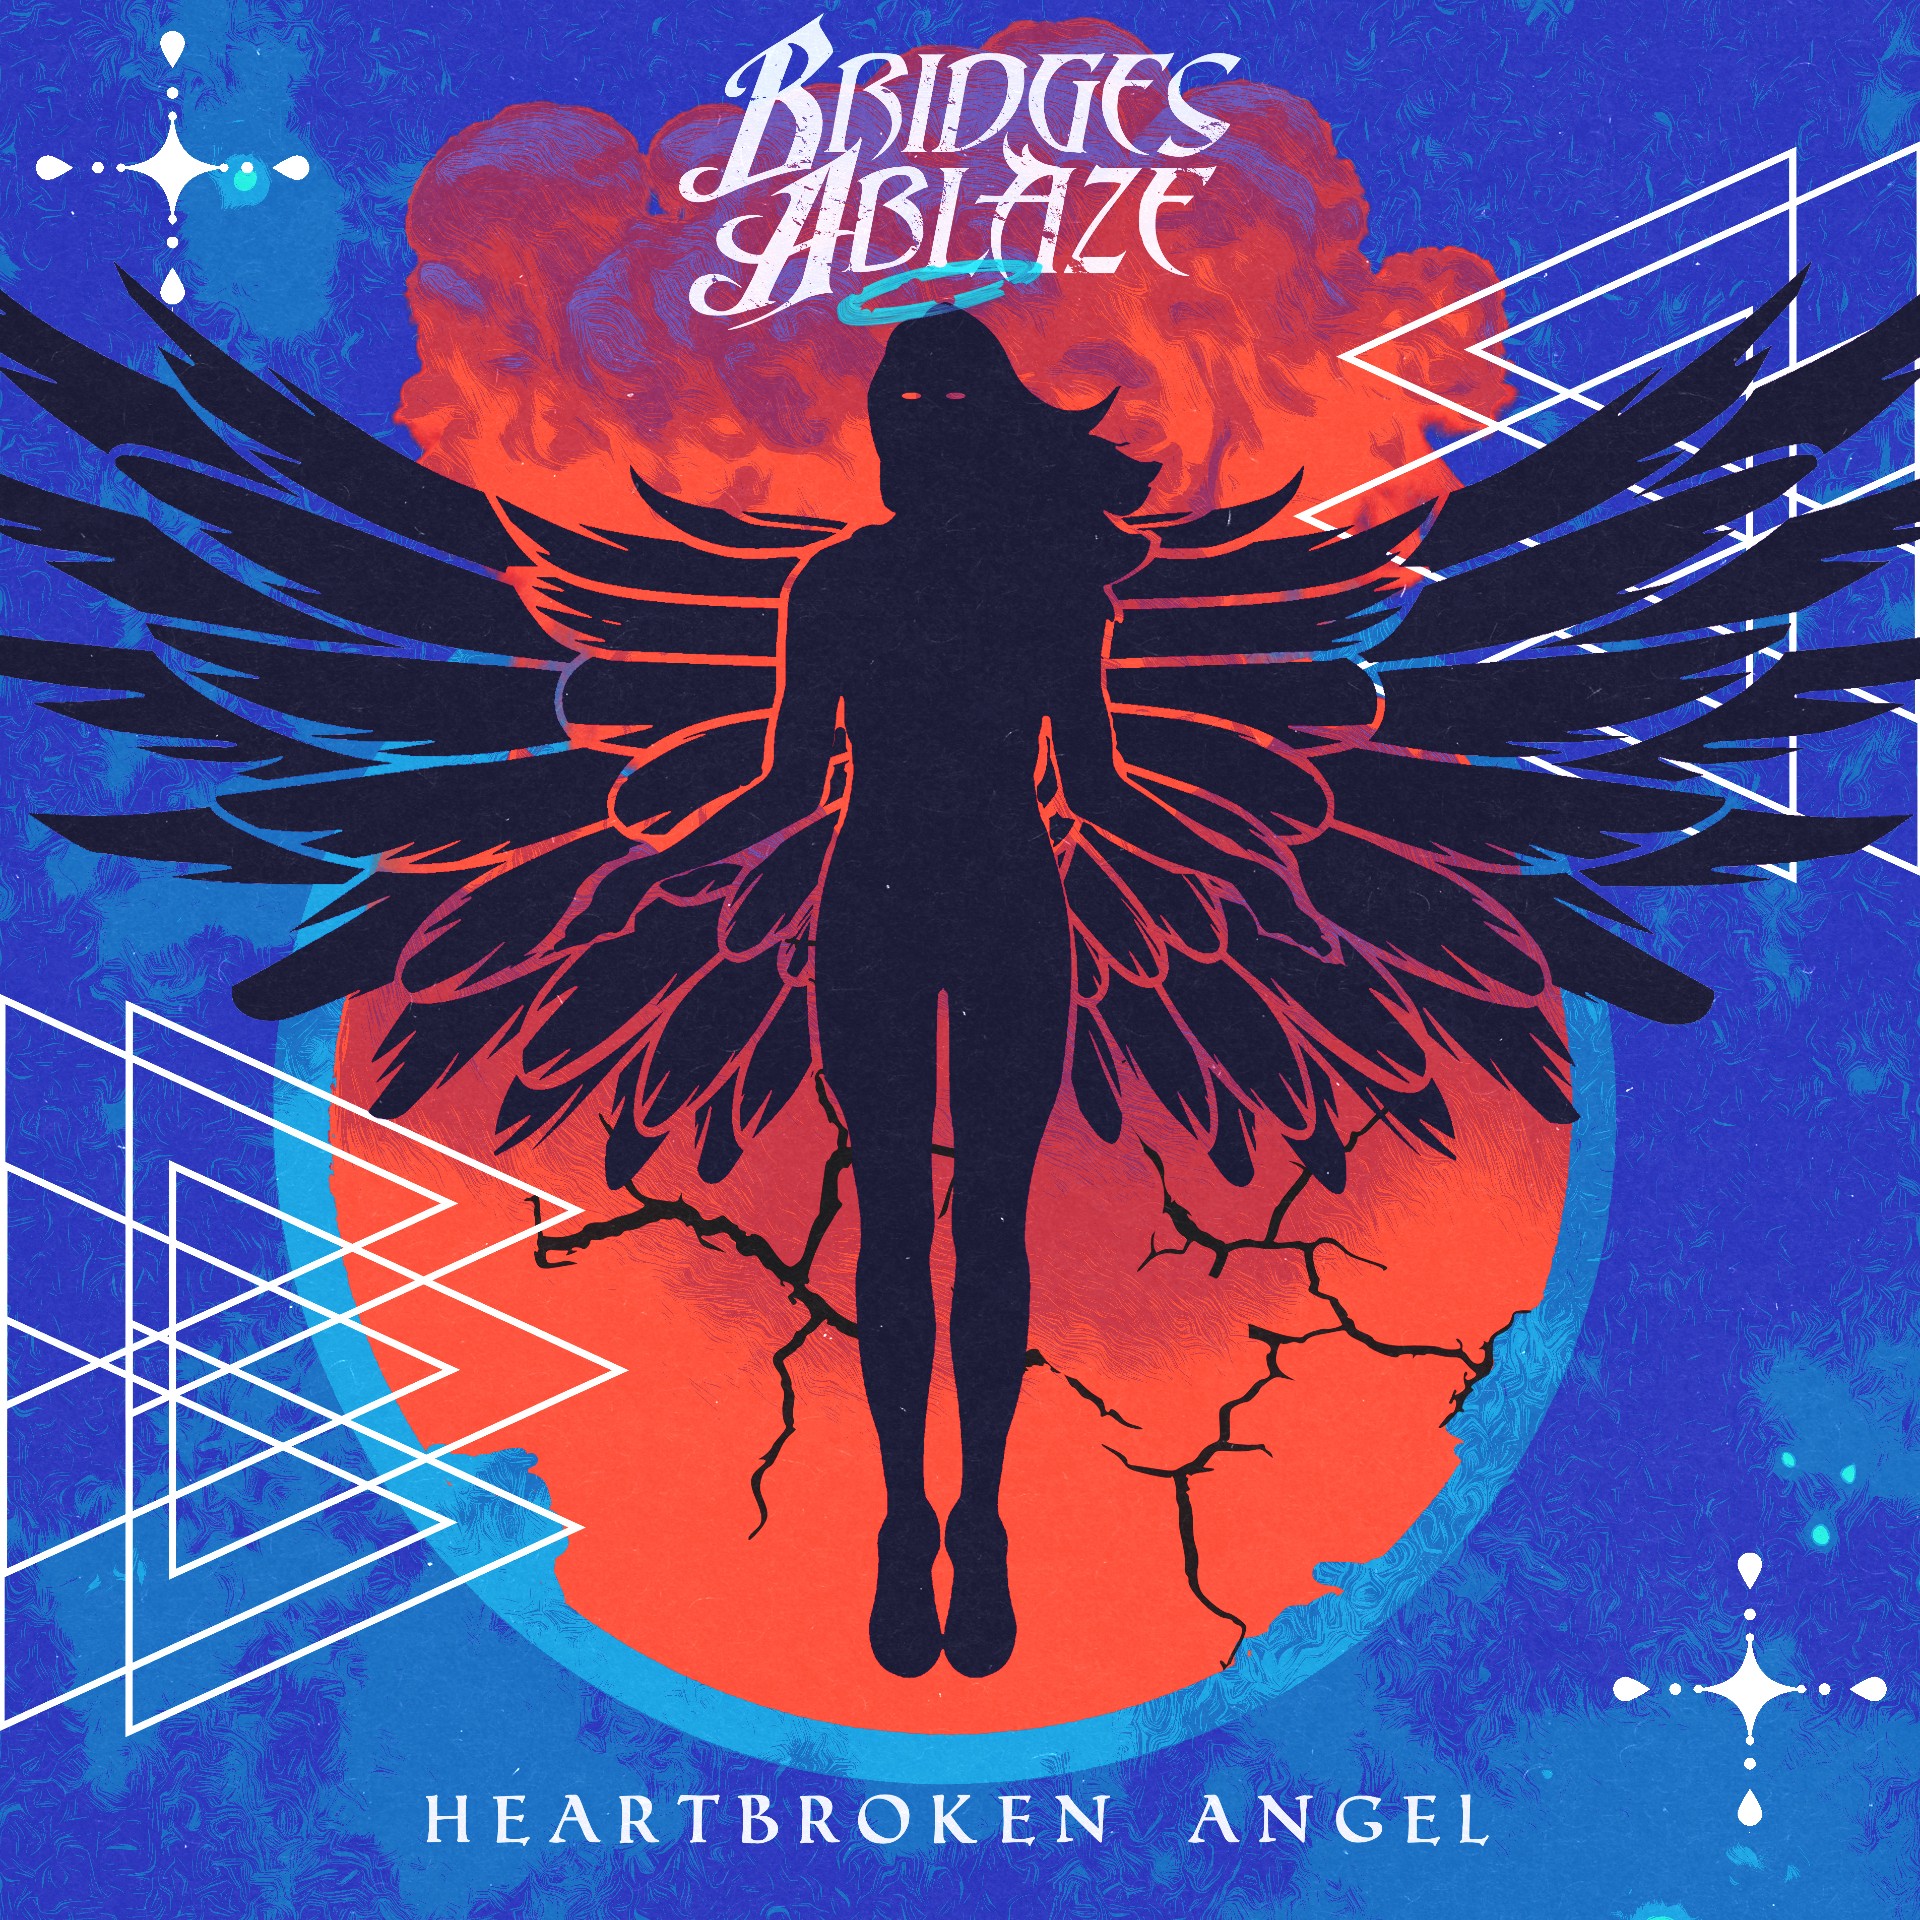 Bridges Ablaze ‘Heartbroken Angel’ album artwork